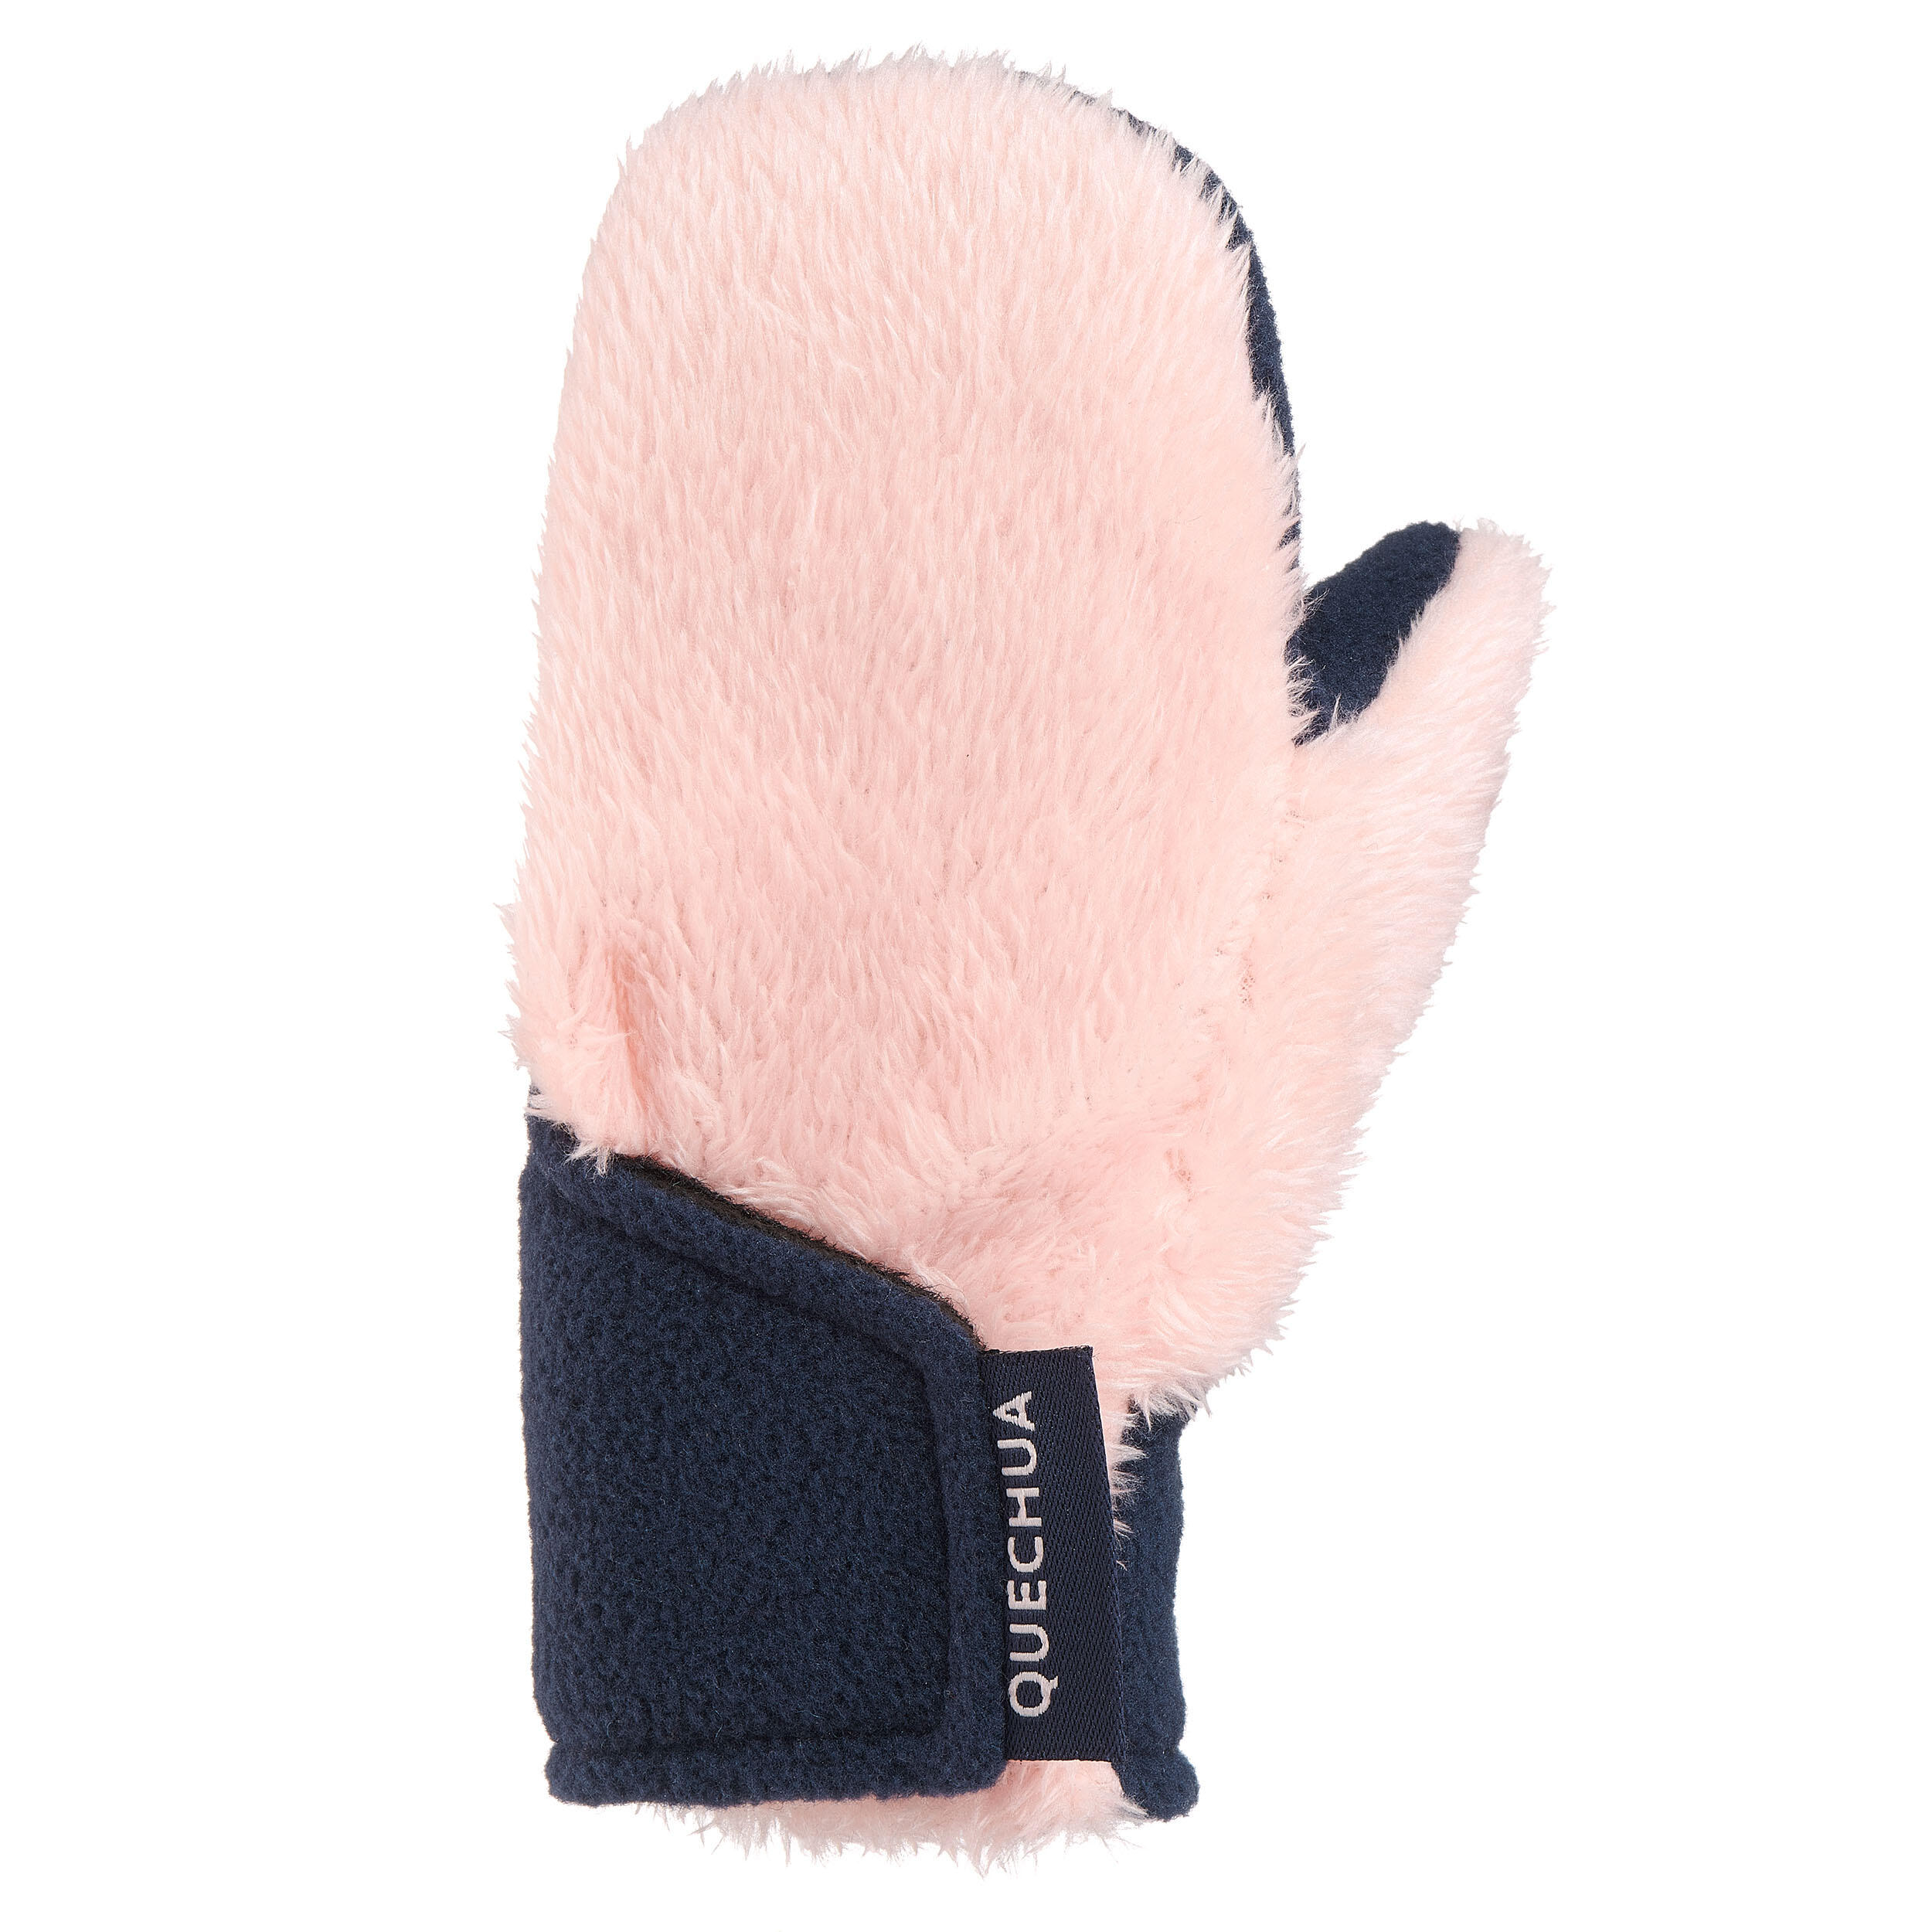 decathlon fleece gloves